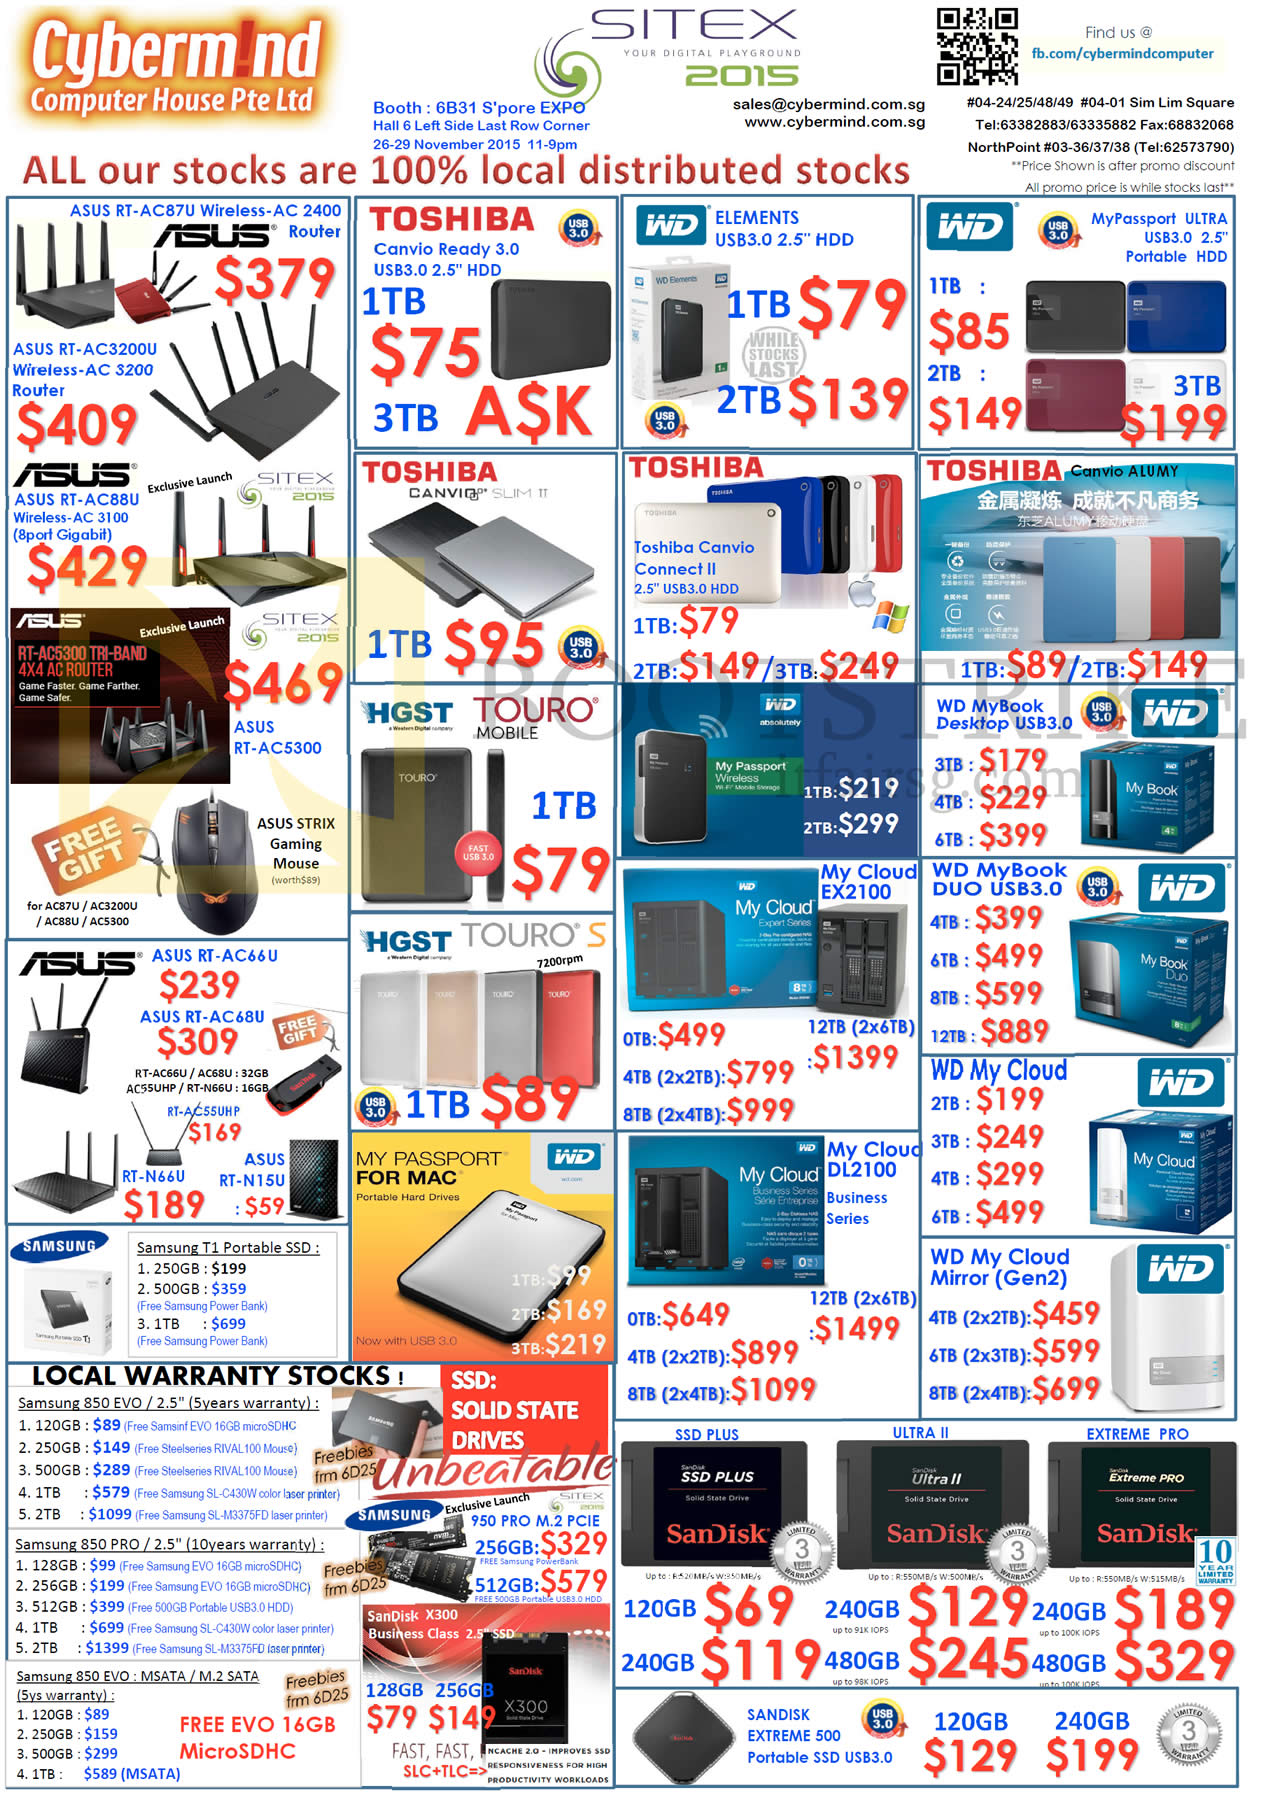 SITEX 2015 price list image brochure of Cybermind Wireless Router, Hard Disk Drives, Router, Toshiba, Western Digital, HGST, Asus, Samsung, 1TB, 2TB, 3TB, 4TB, 6TB, 120Gb, 240GB, 480GB